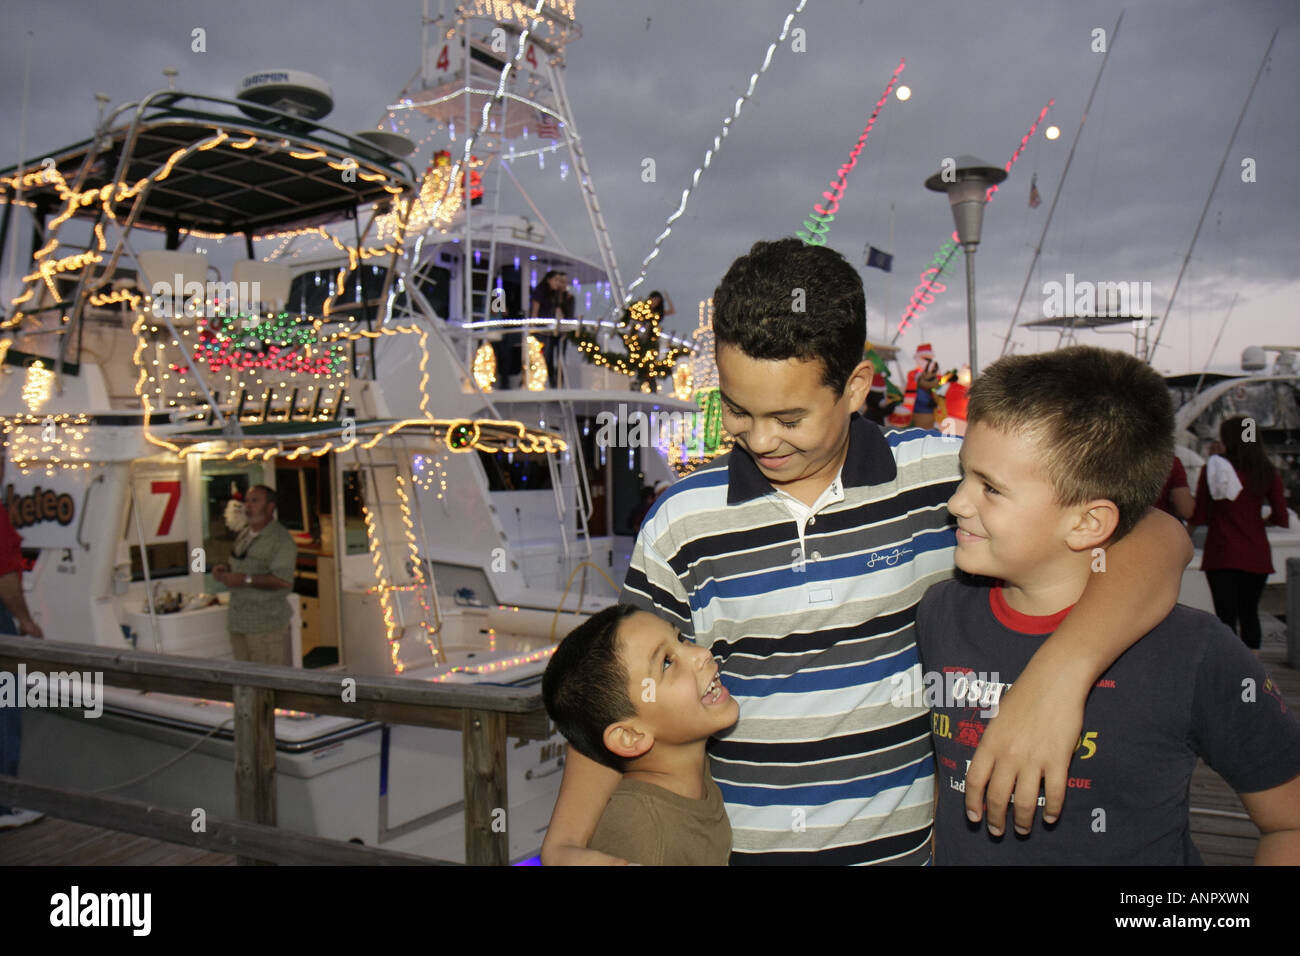 Miami Florida,Watson Island,Biscayne Bay water,Annual Holiday Boat Parade,Christmas event,decoration,decorations,Hispanic Latin Latino ethnic immigran Stock Photo